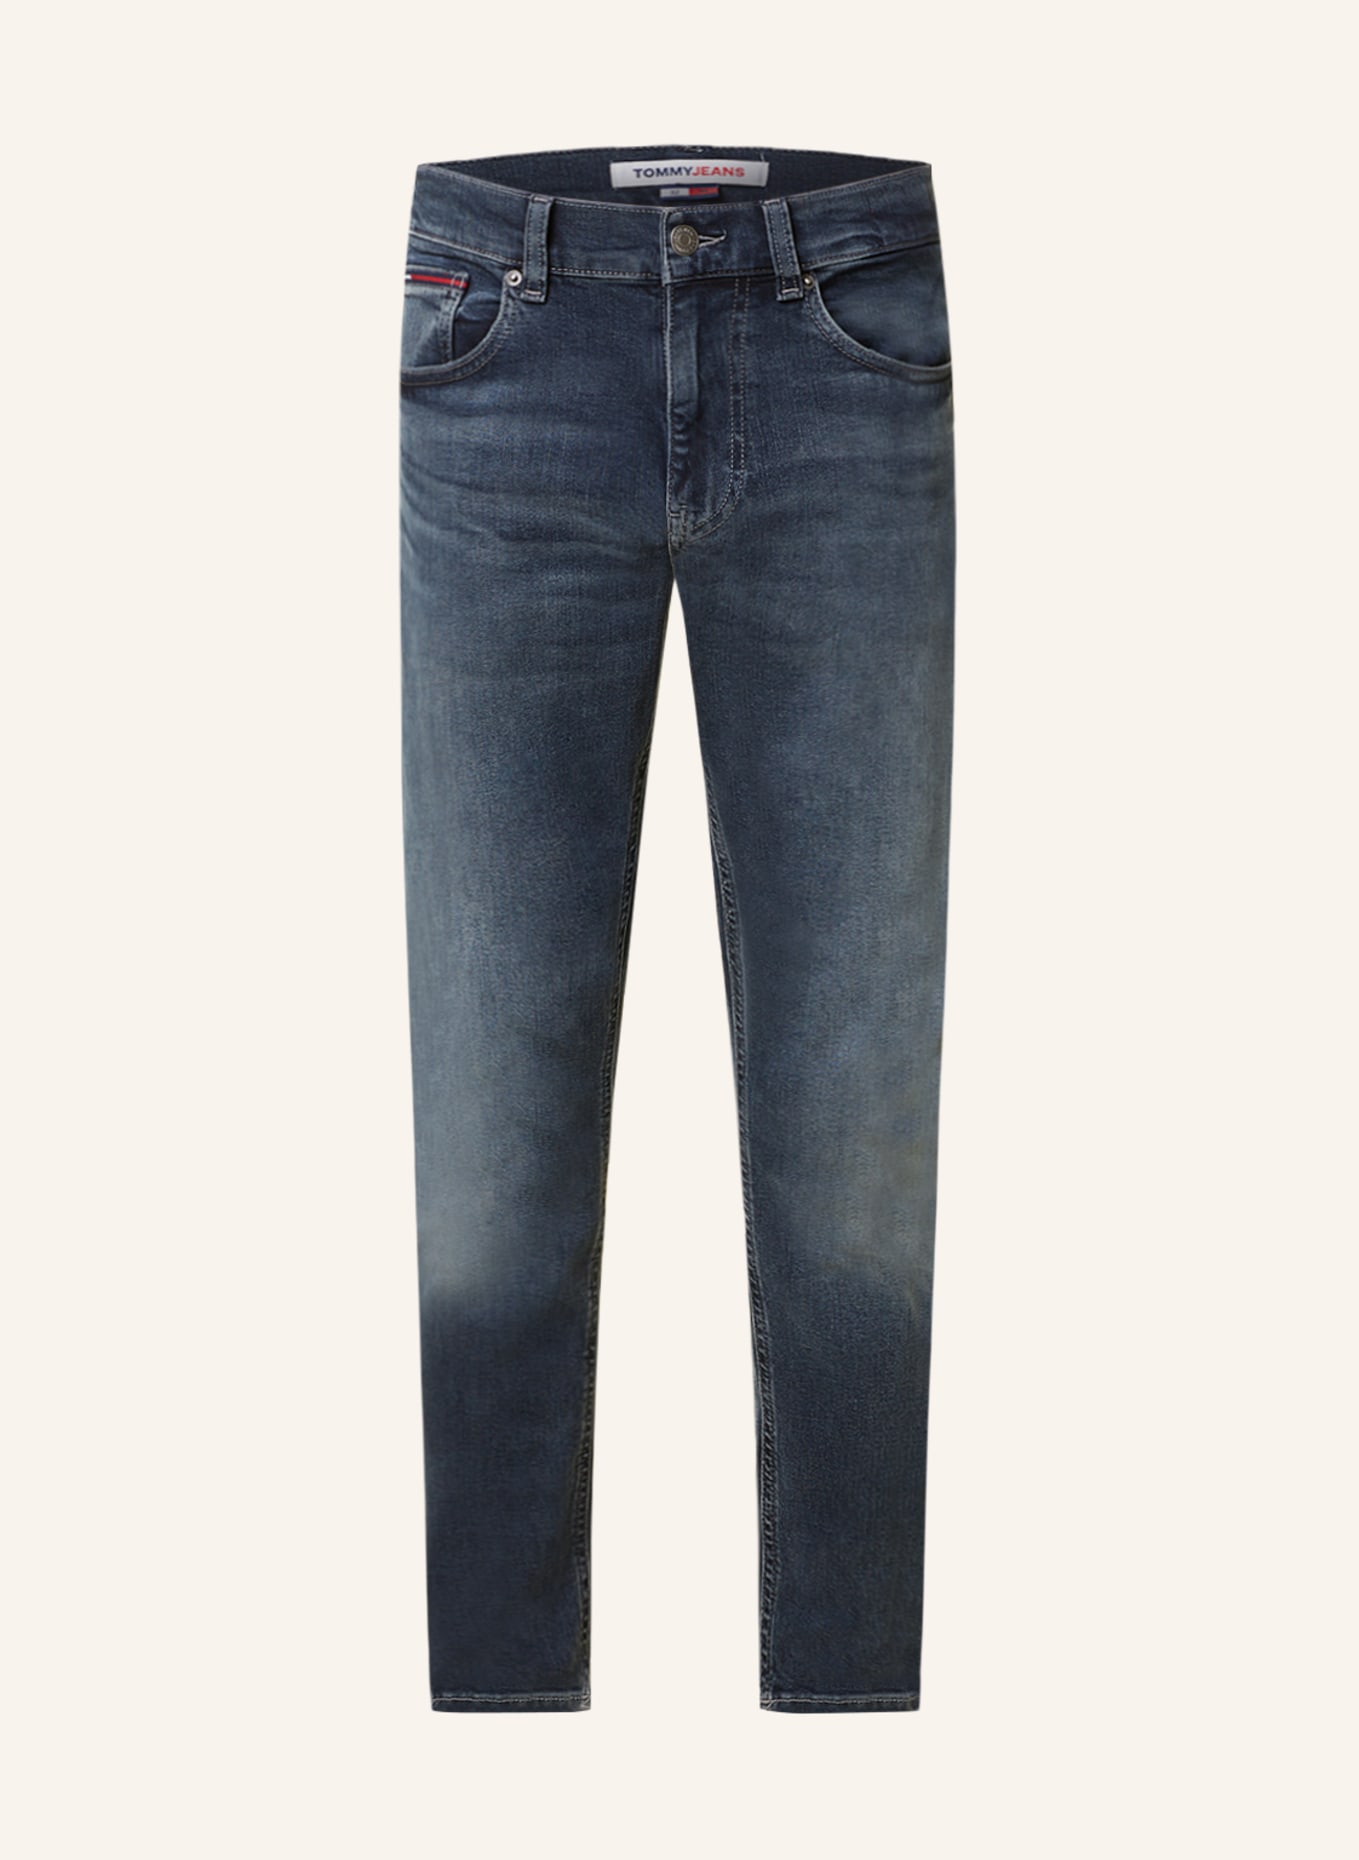 TOMMY JEANS Jeans AUSTIN Slim Tapered Fit, Farbe: 1BZ Denim Black(Bild null)